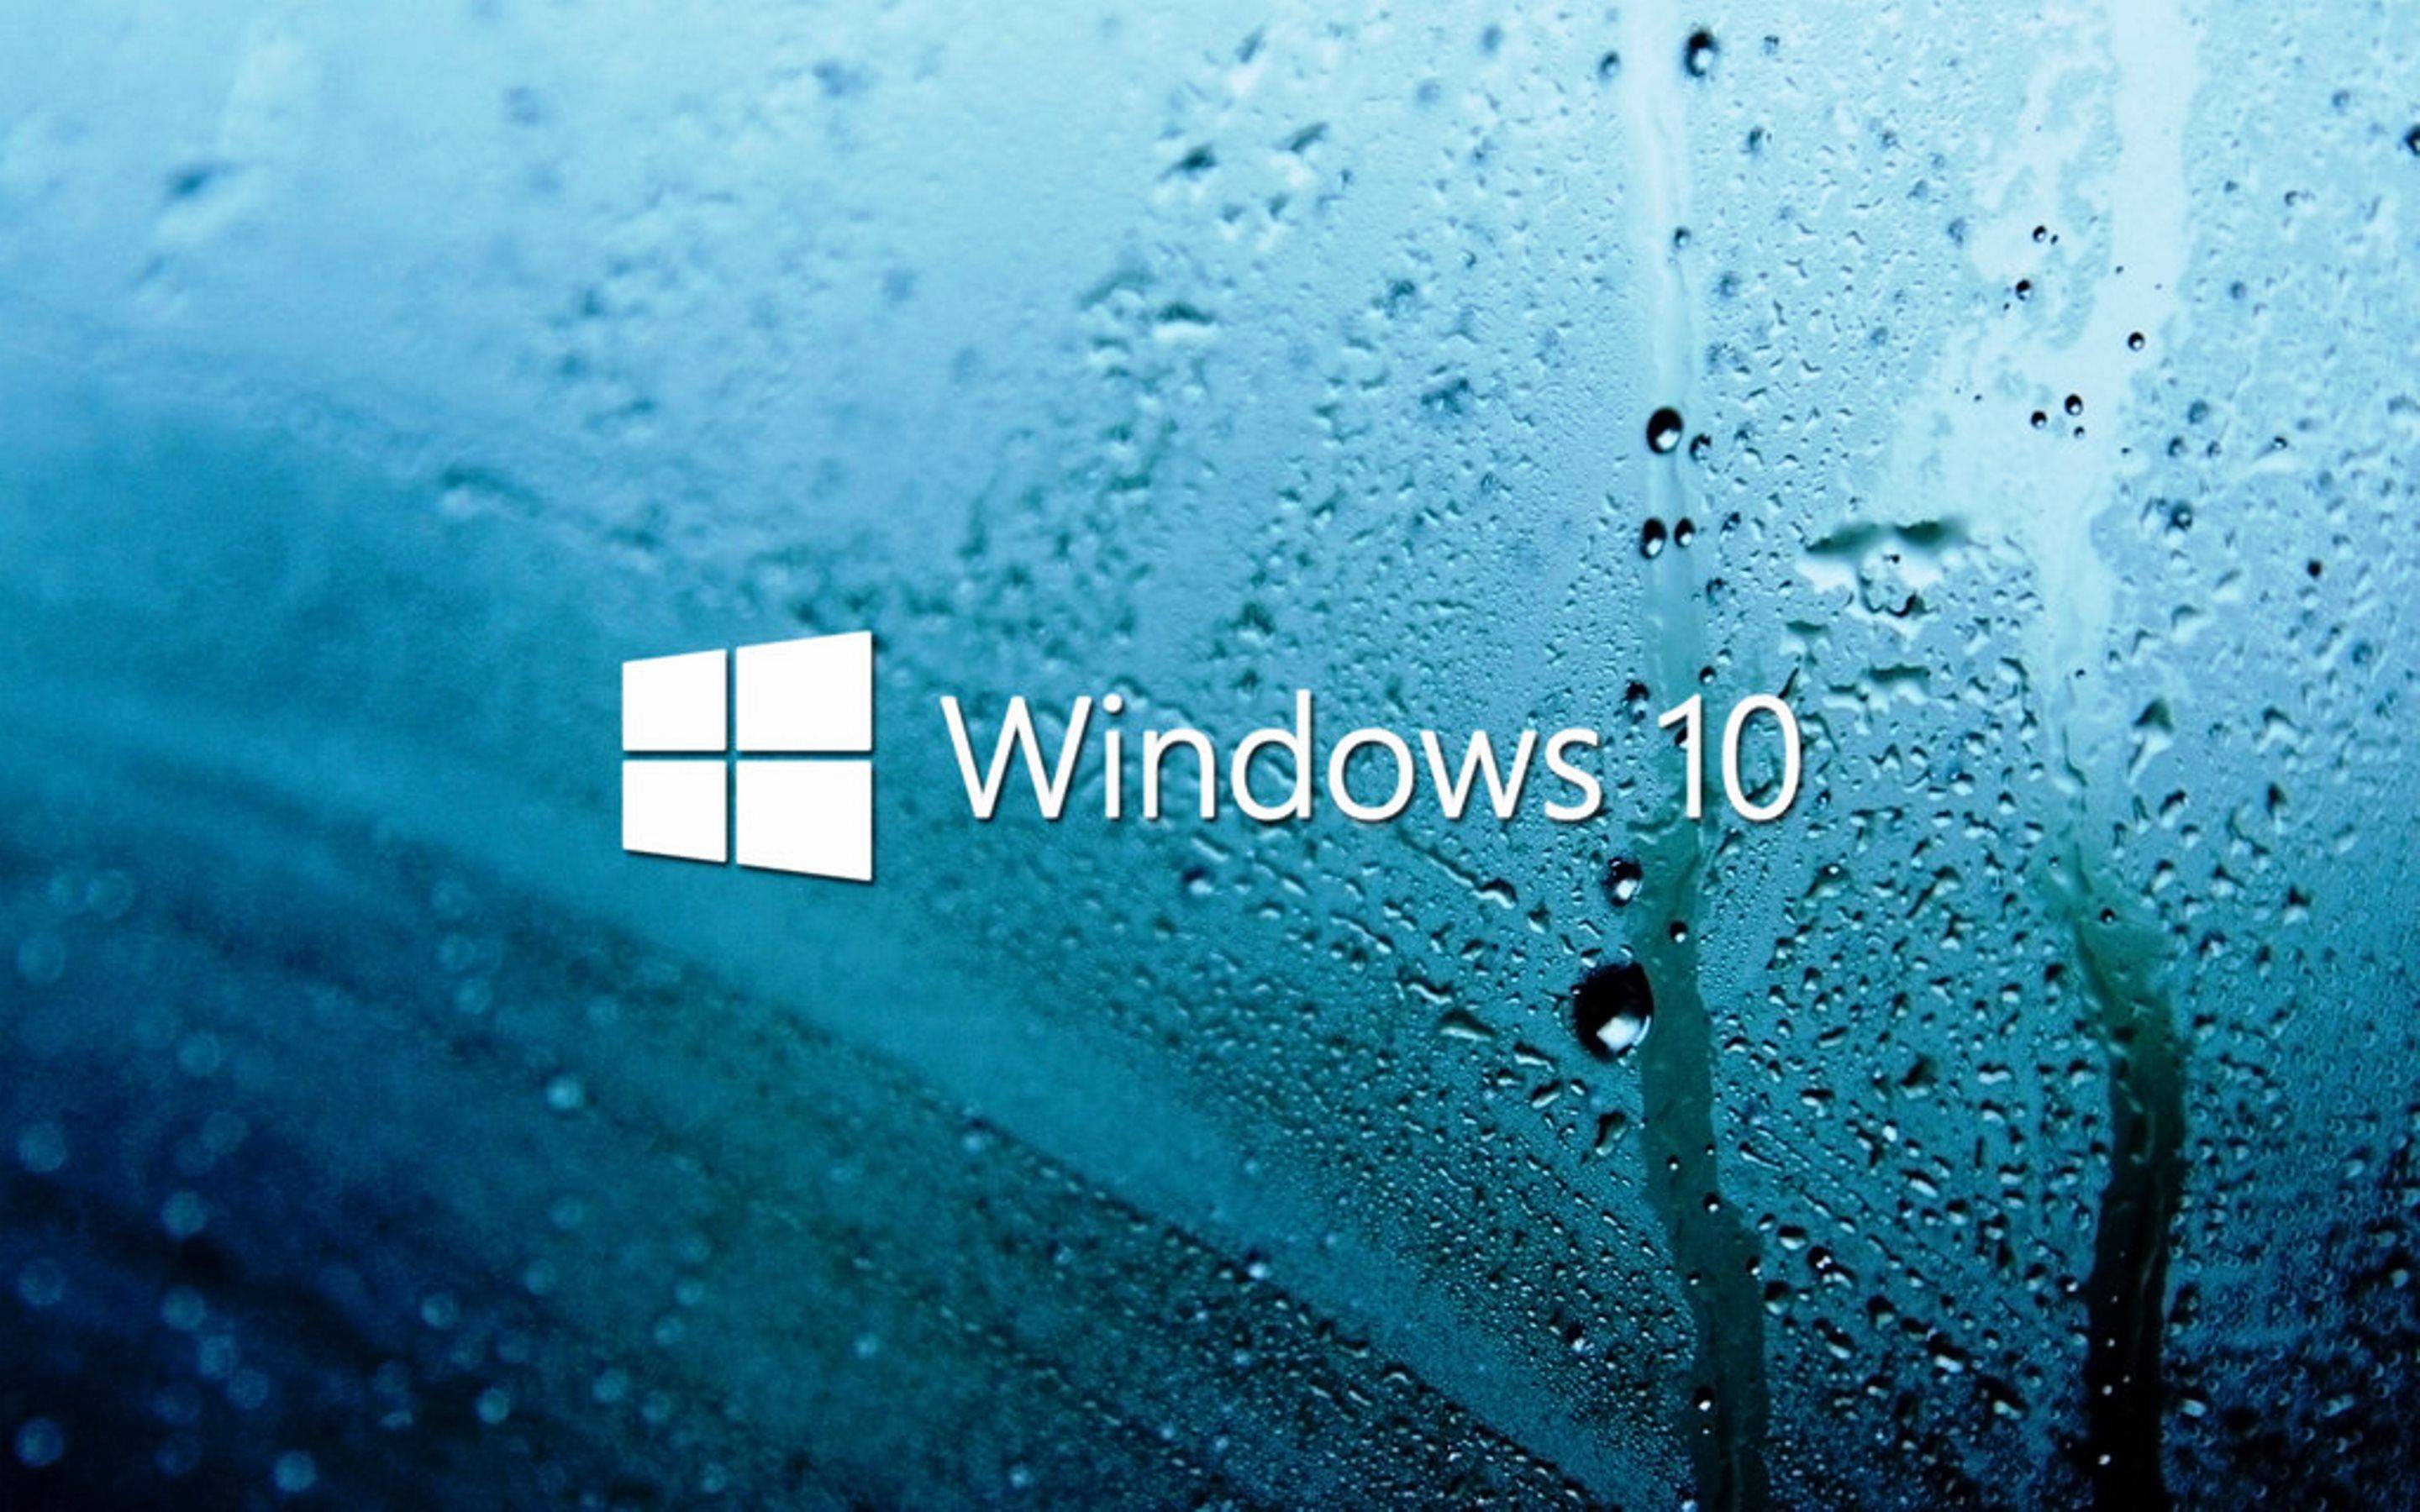 Windows-10-Wallpaper-2880x1800.jpg